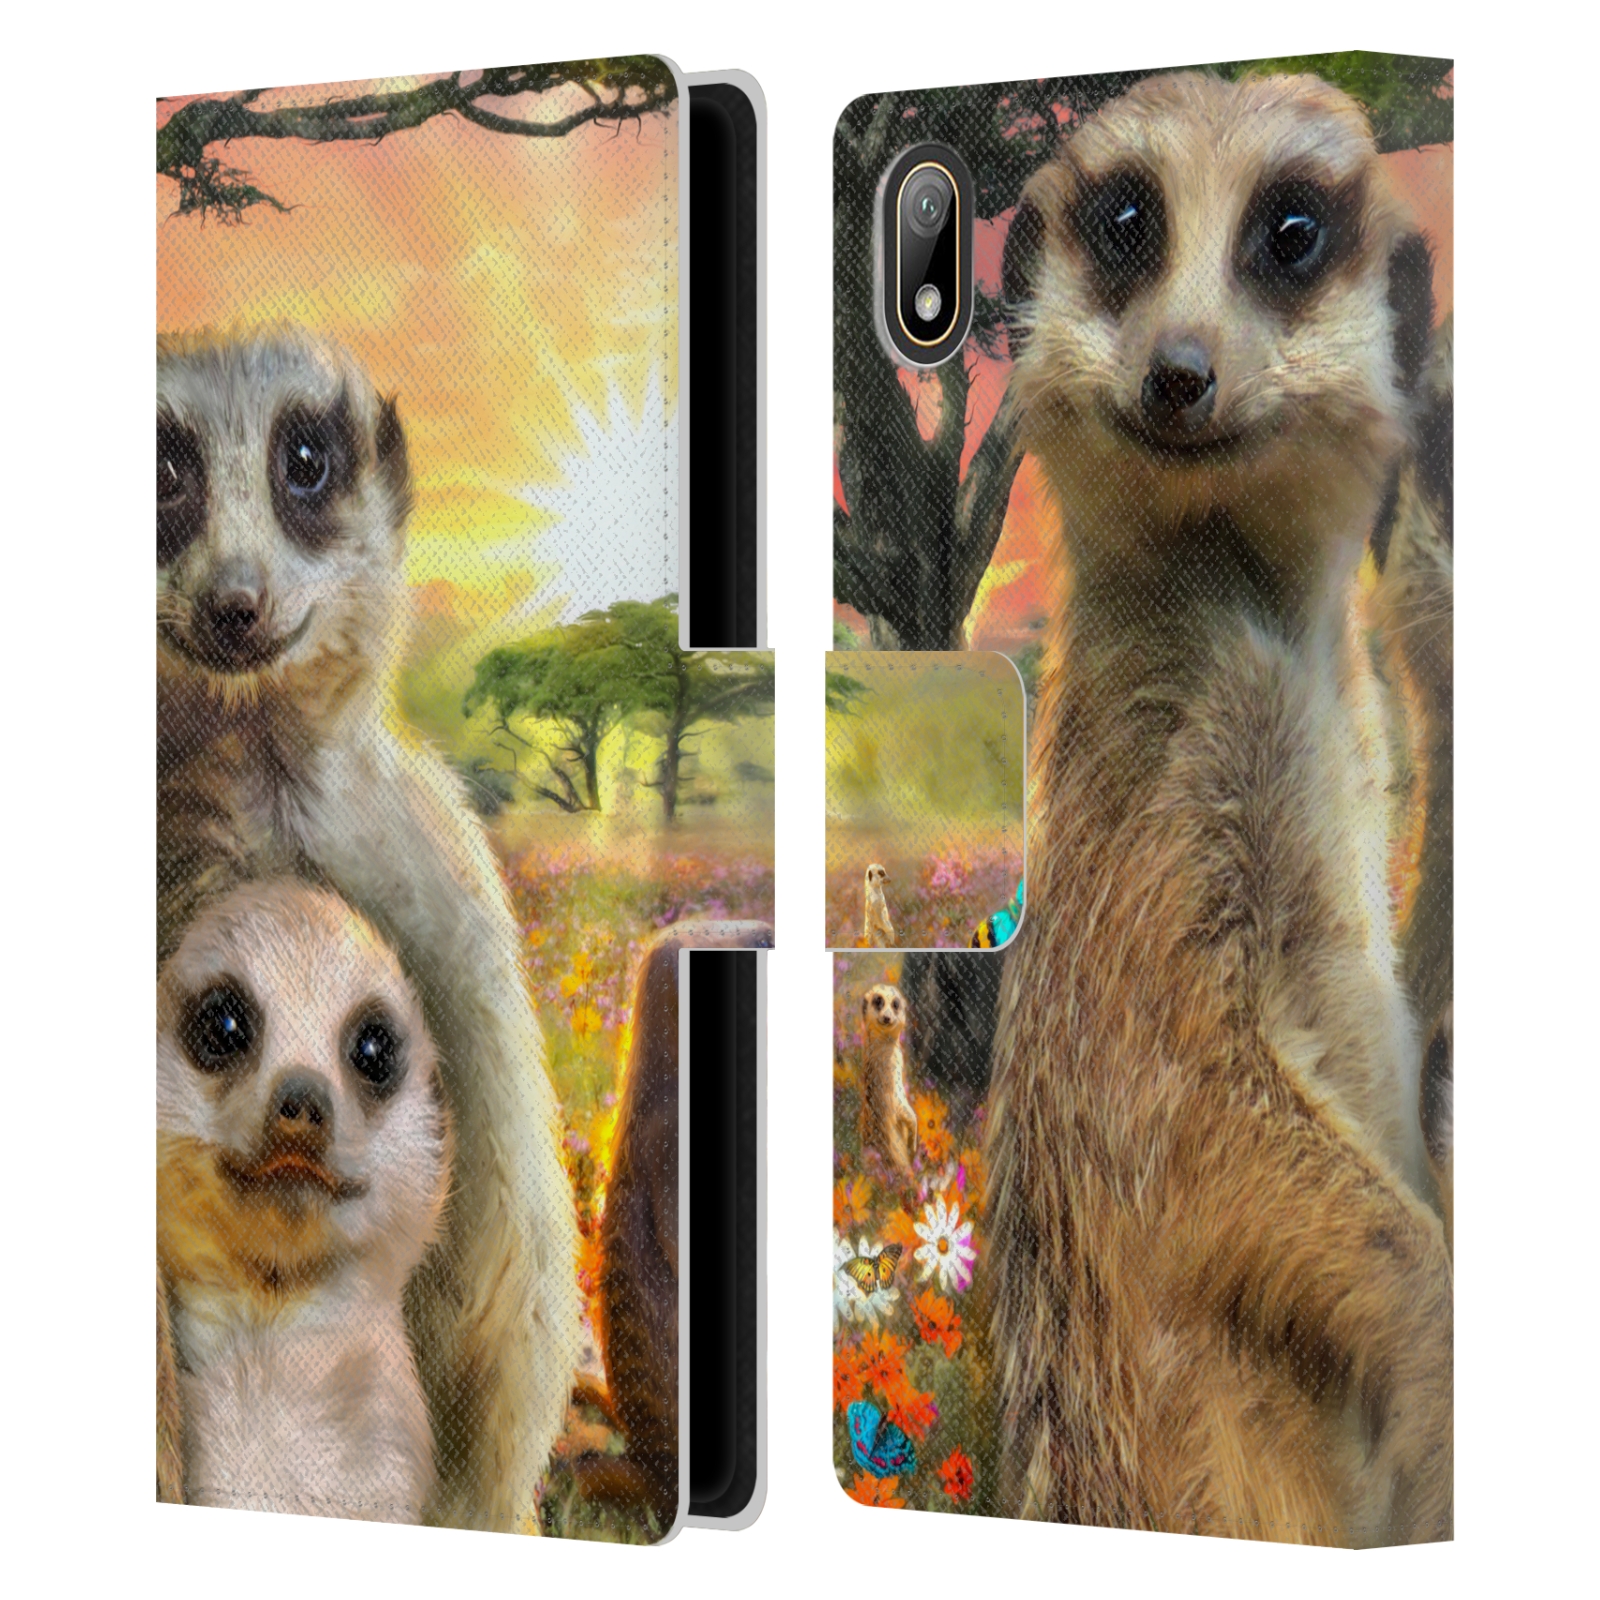 Pouzdro HEAD CASE pro mobil Huawei Y5 2019 - Aimee Stewart foto surikaty příroda